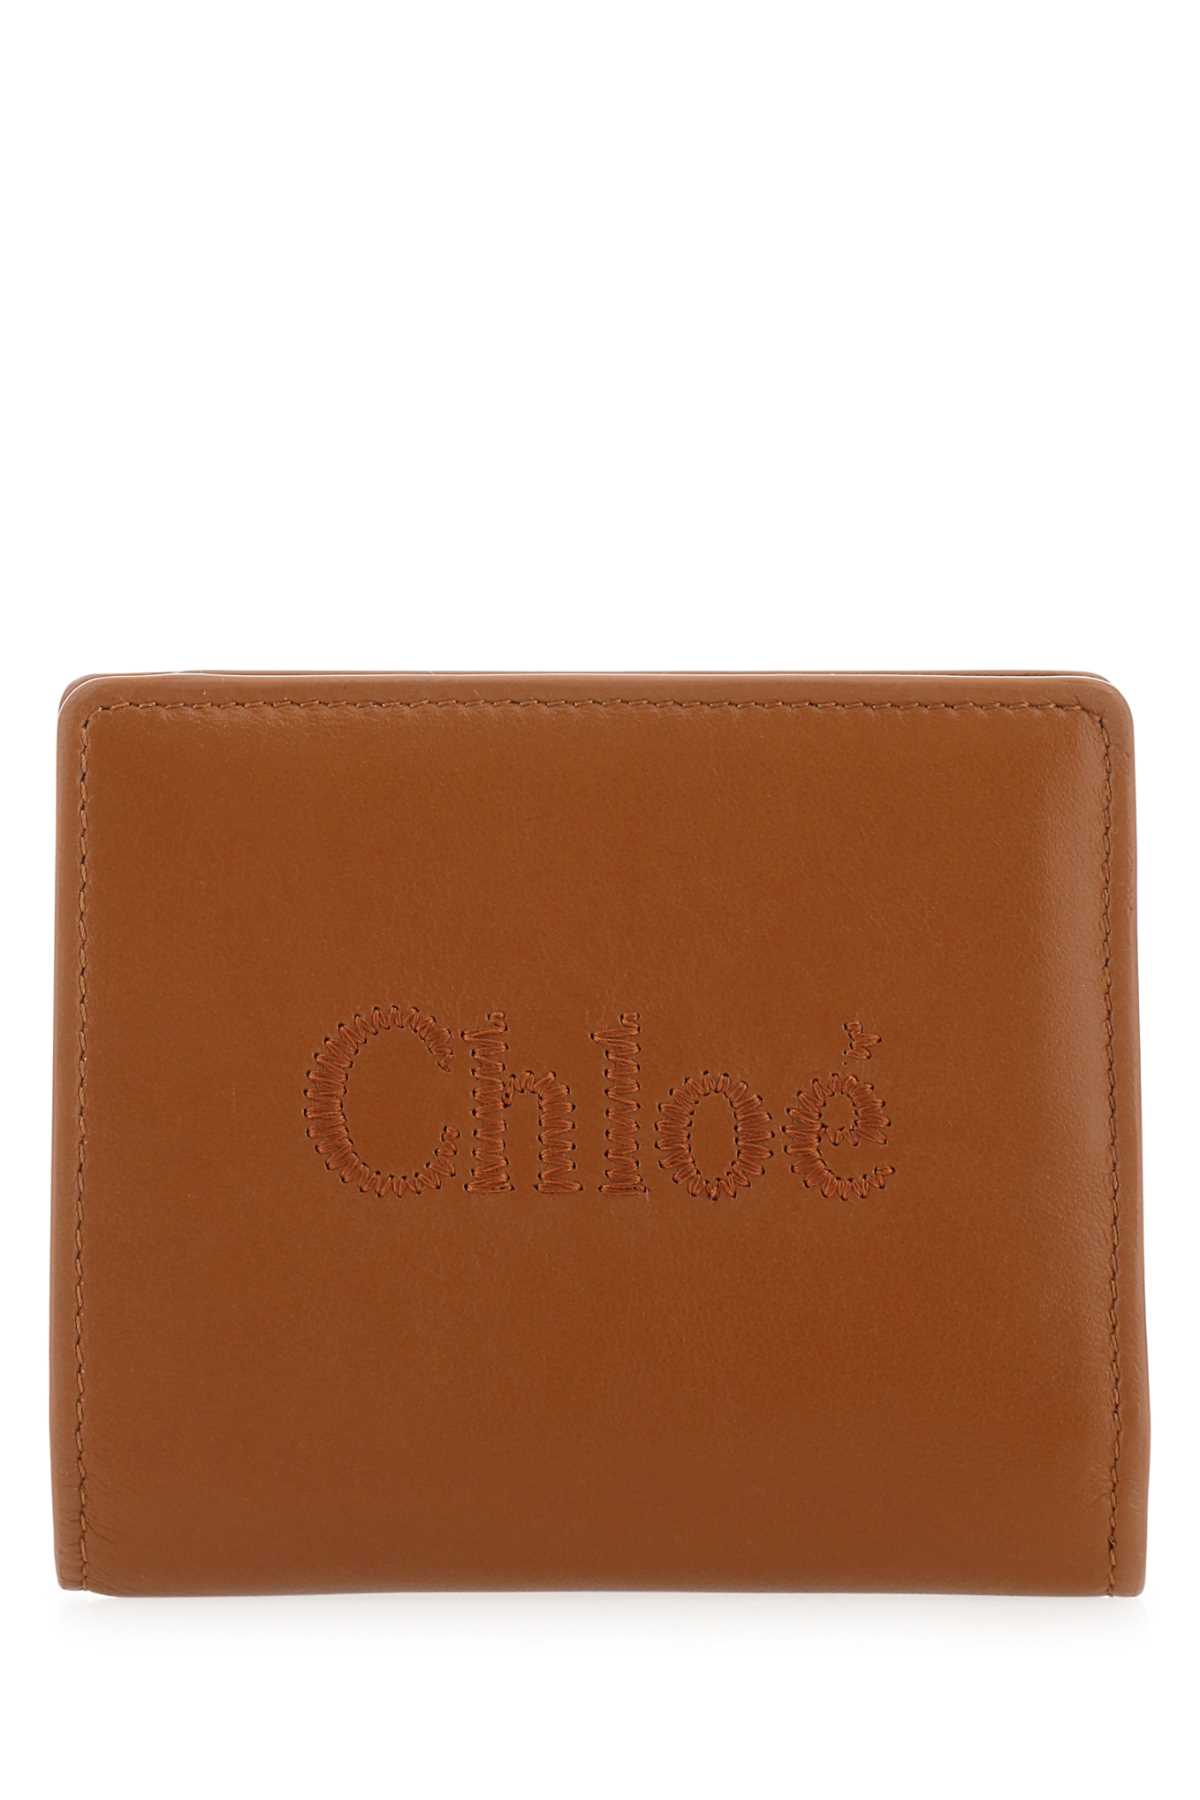 Chloé Caramel Leather Sense Wallet In 247